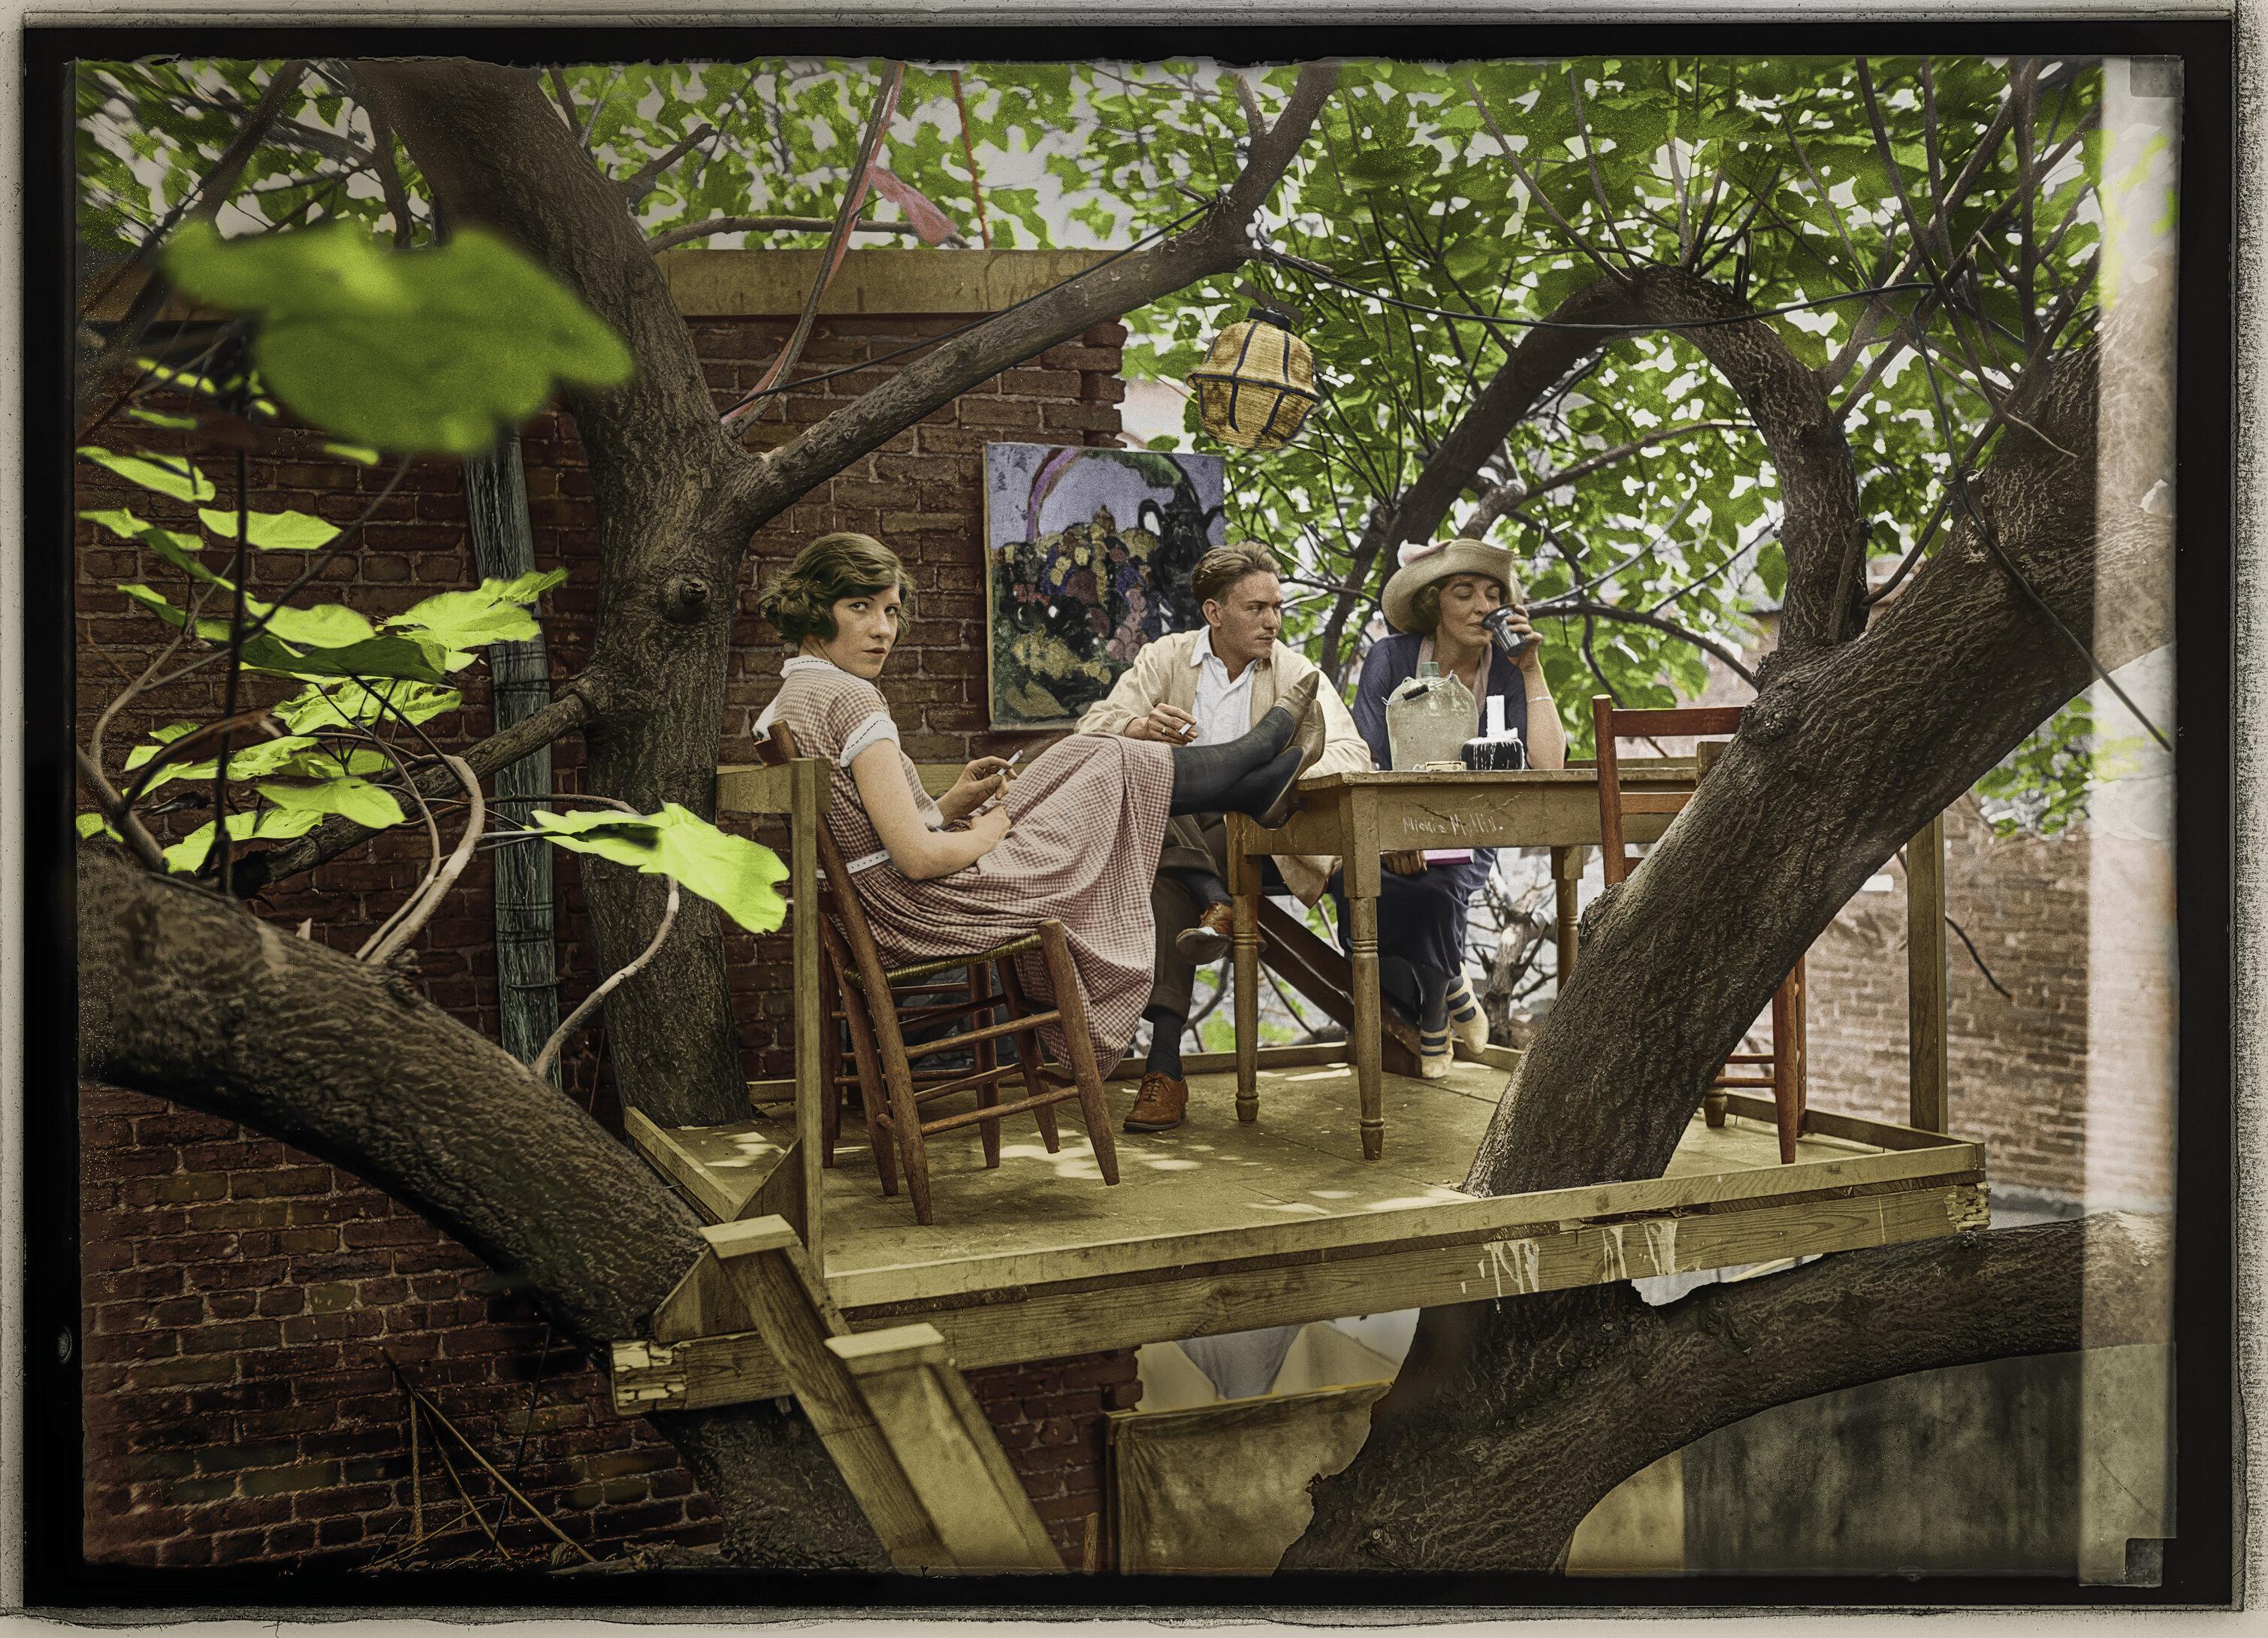 Members of the Krazy Kat Club in their tree house, Washington DC, 15 July 1921.jpg